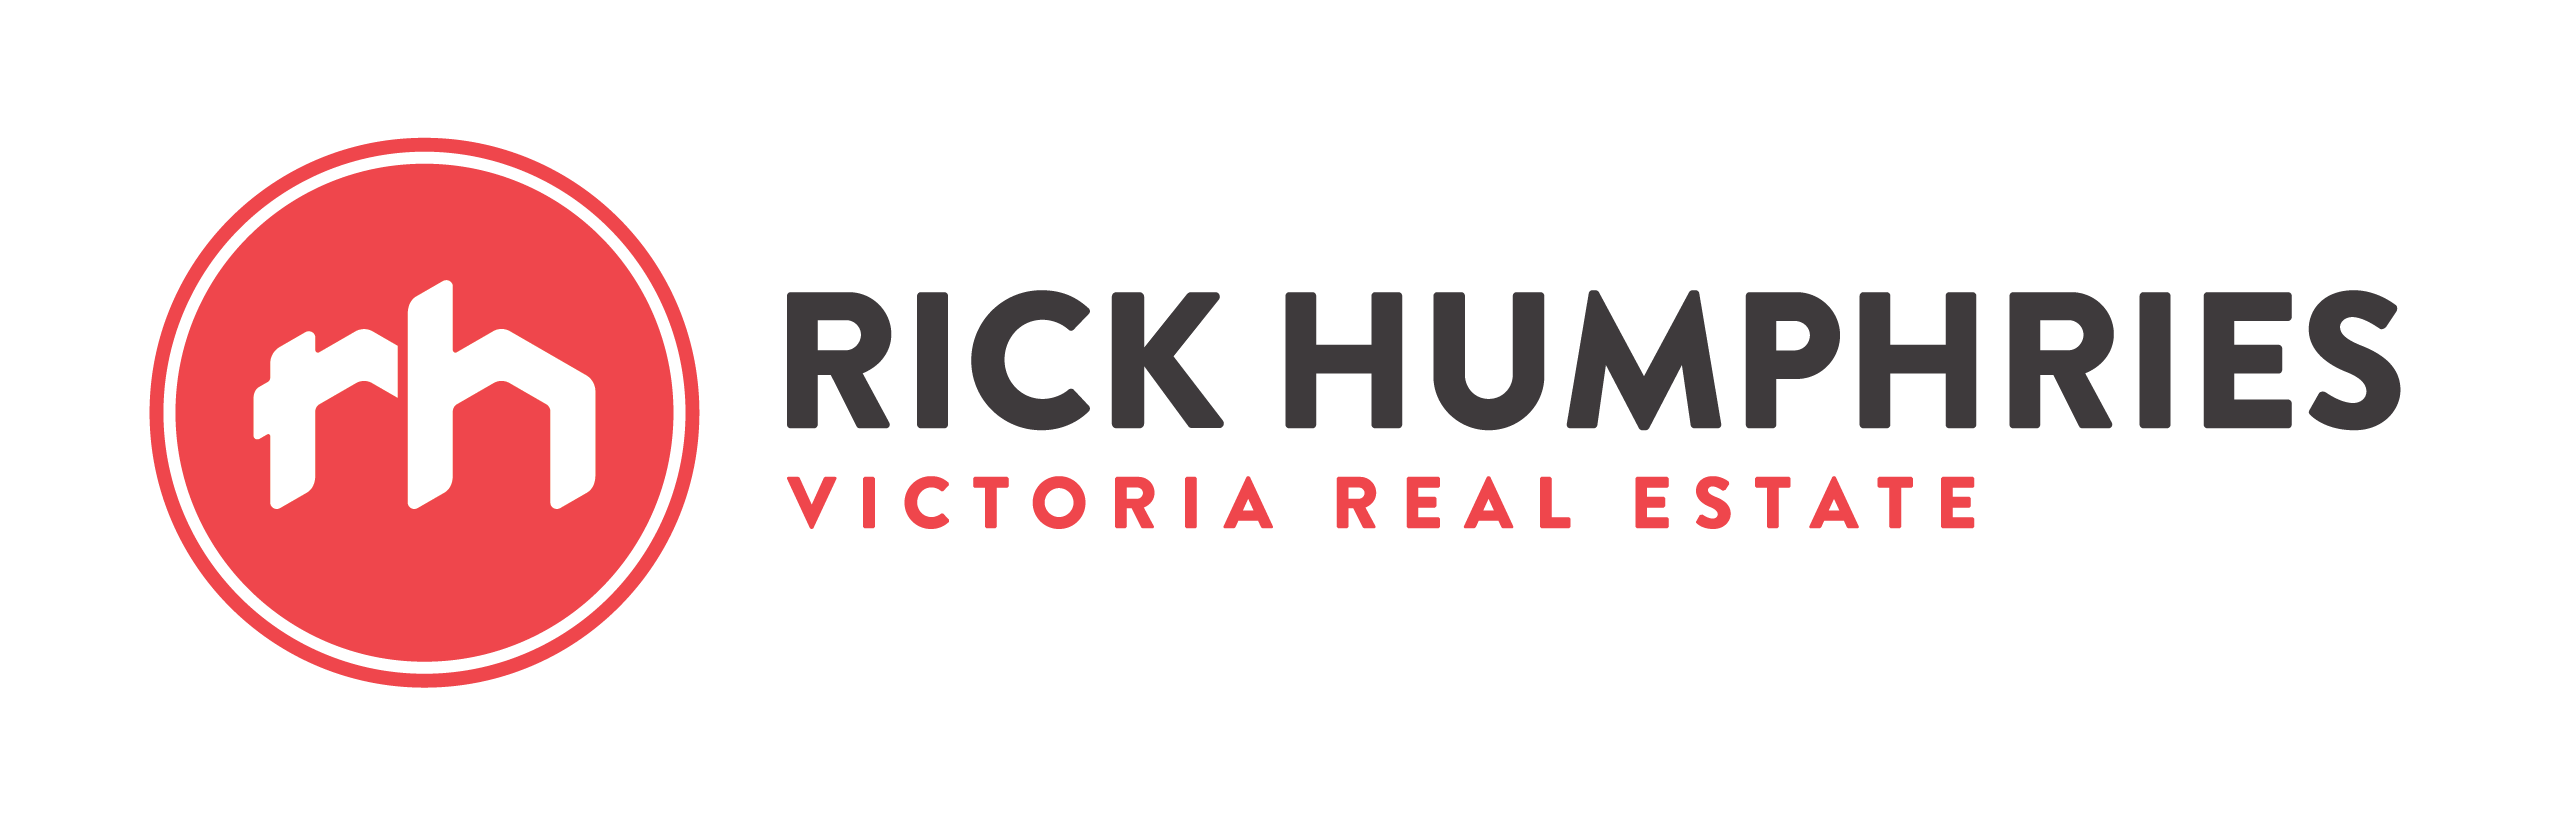 Rick Humphries Real Estate